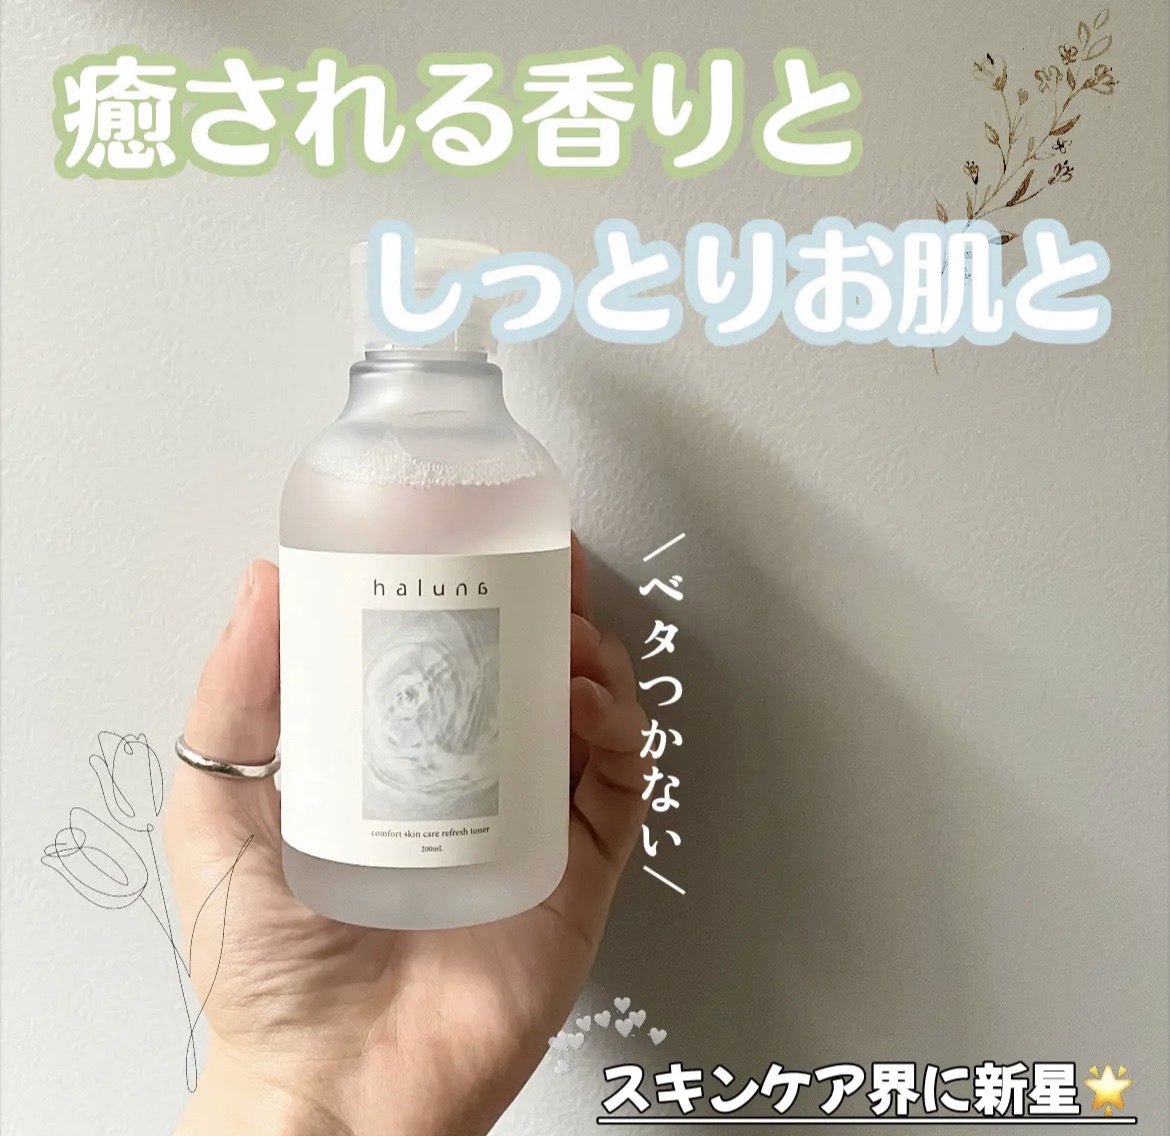 haluna / comfort skin care refresh tonerの公式商品情報｜美容 